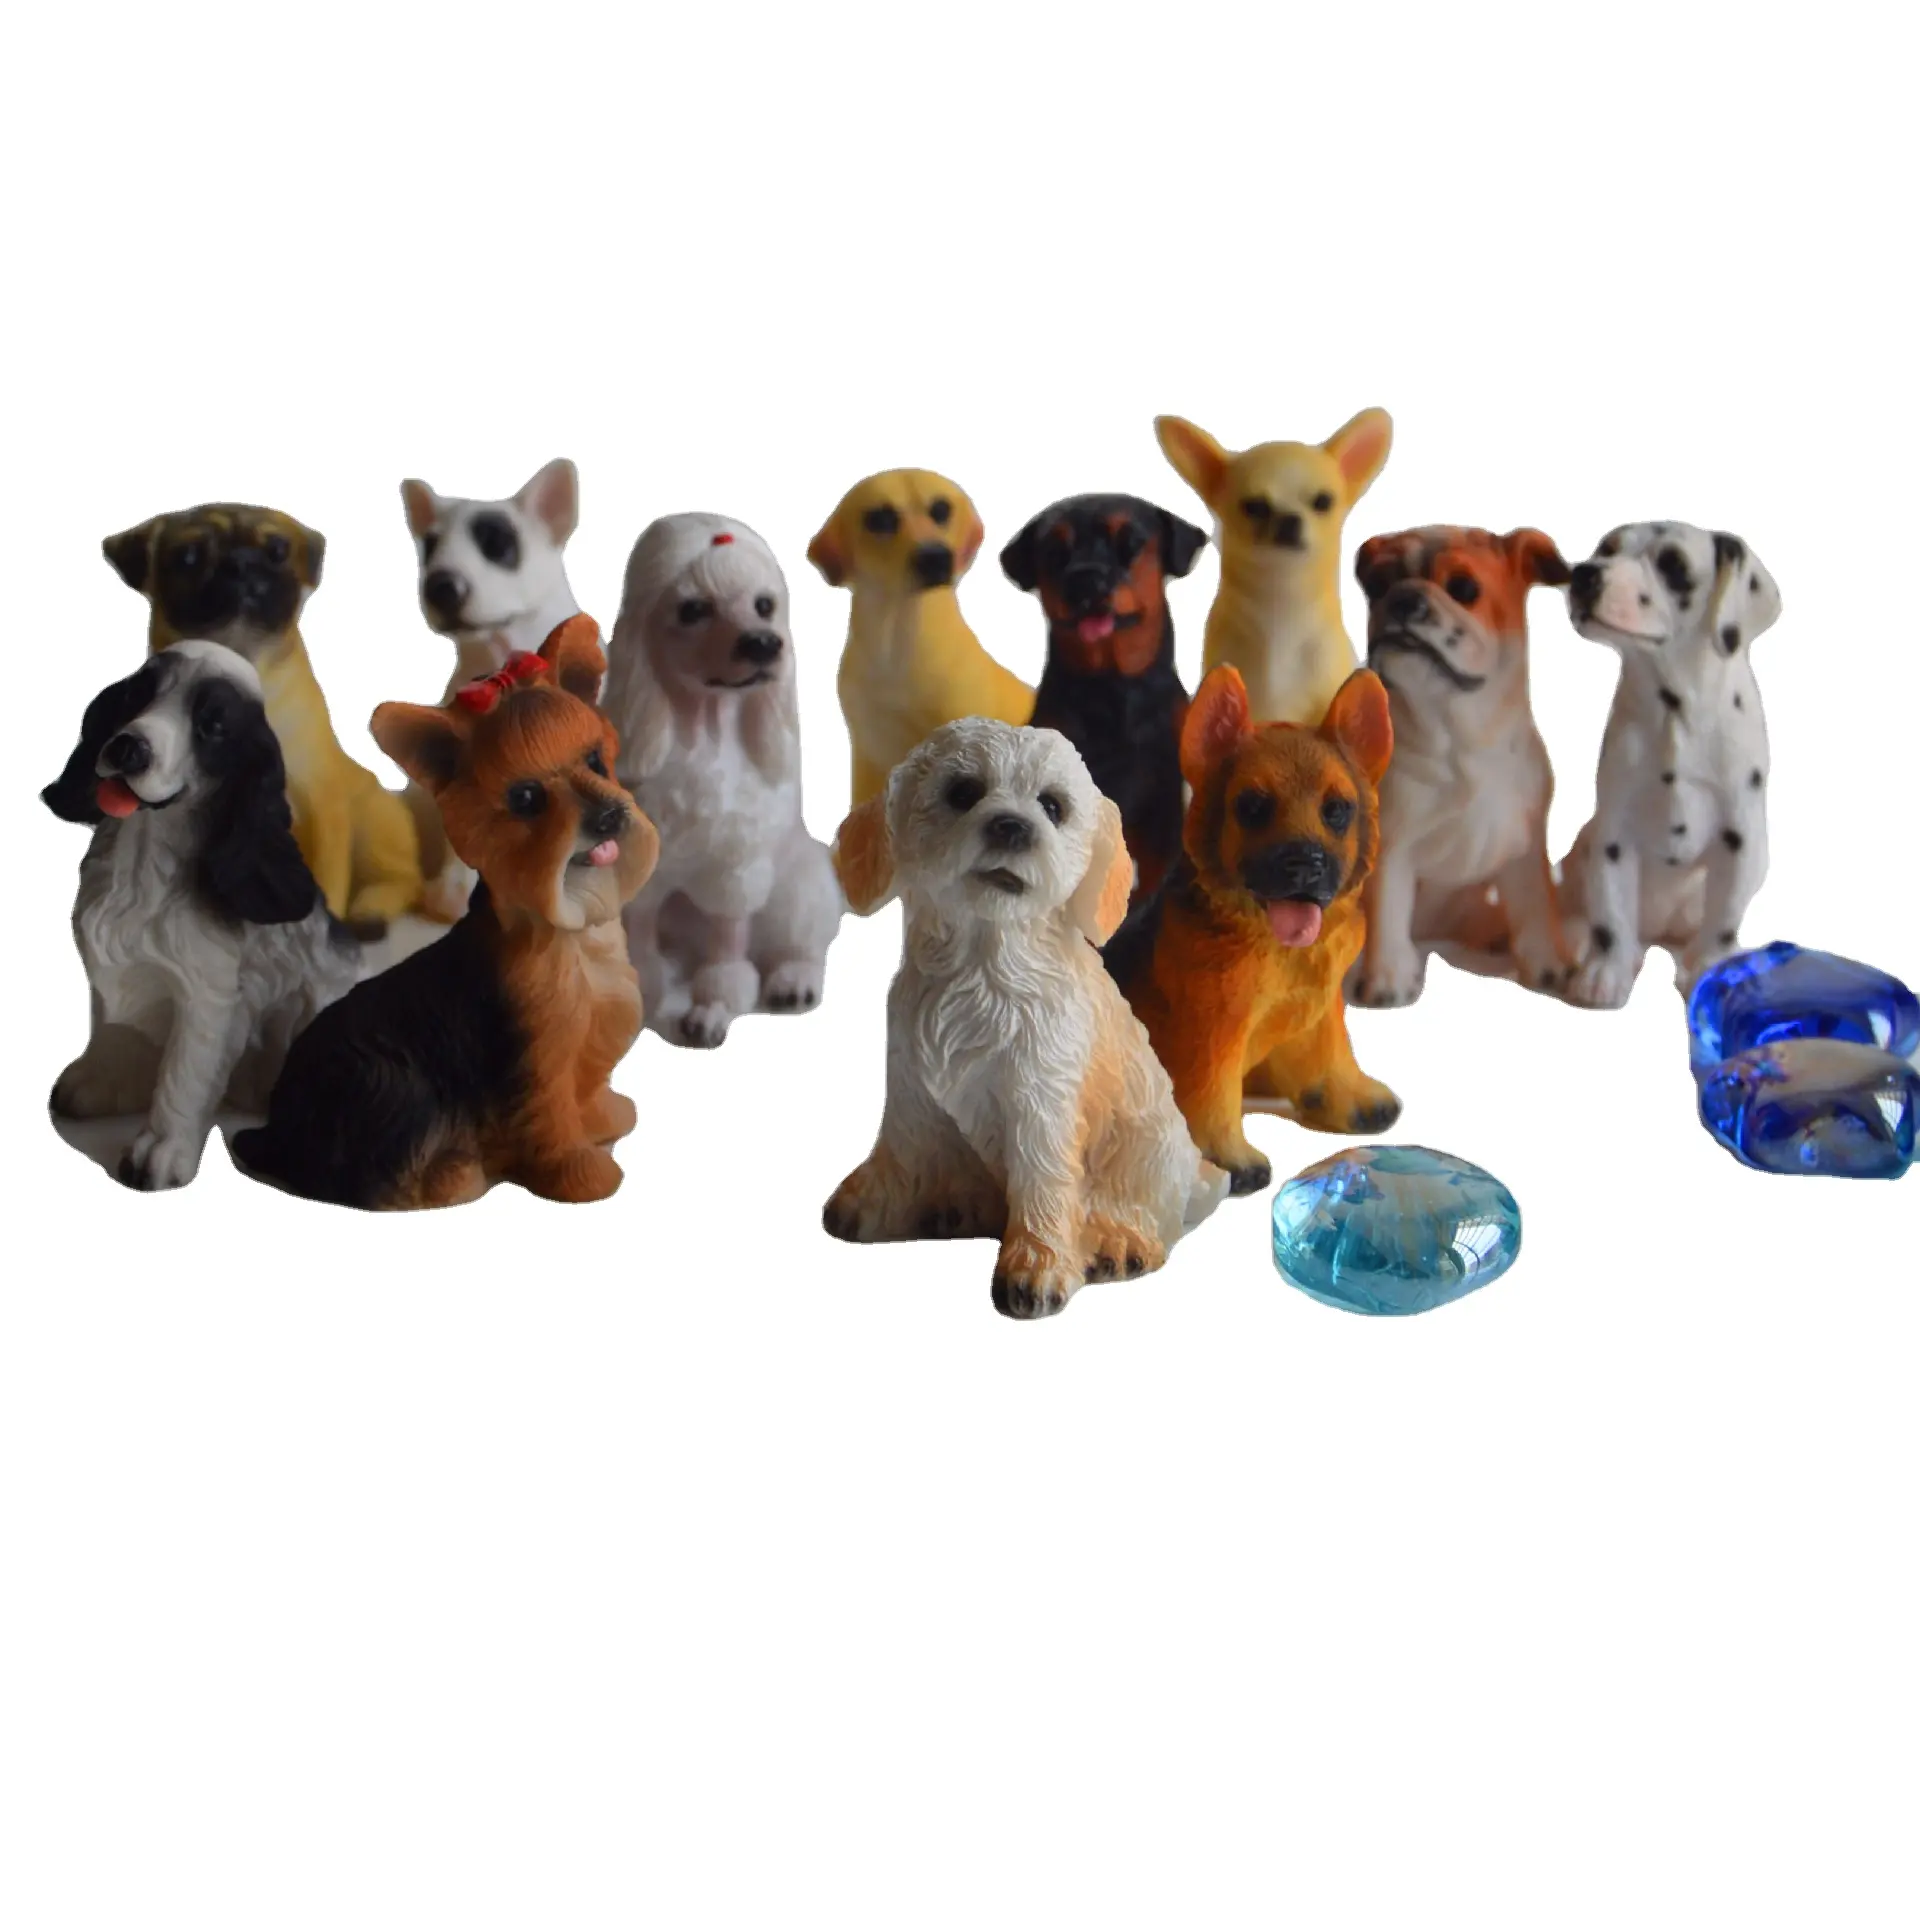 Patung Hewan Taman Resin Patung-patung Anjing Mini Lucu untuk Dekorasi Rumah Pic Show atau Ukuran Disesuaikan Kerajinan Tangan SLT